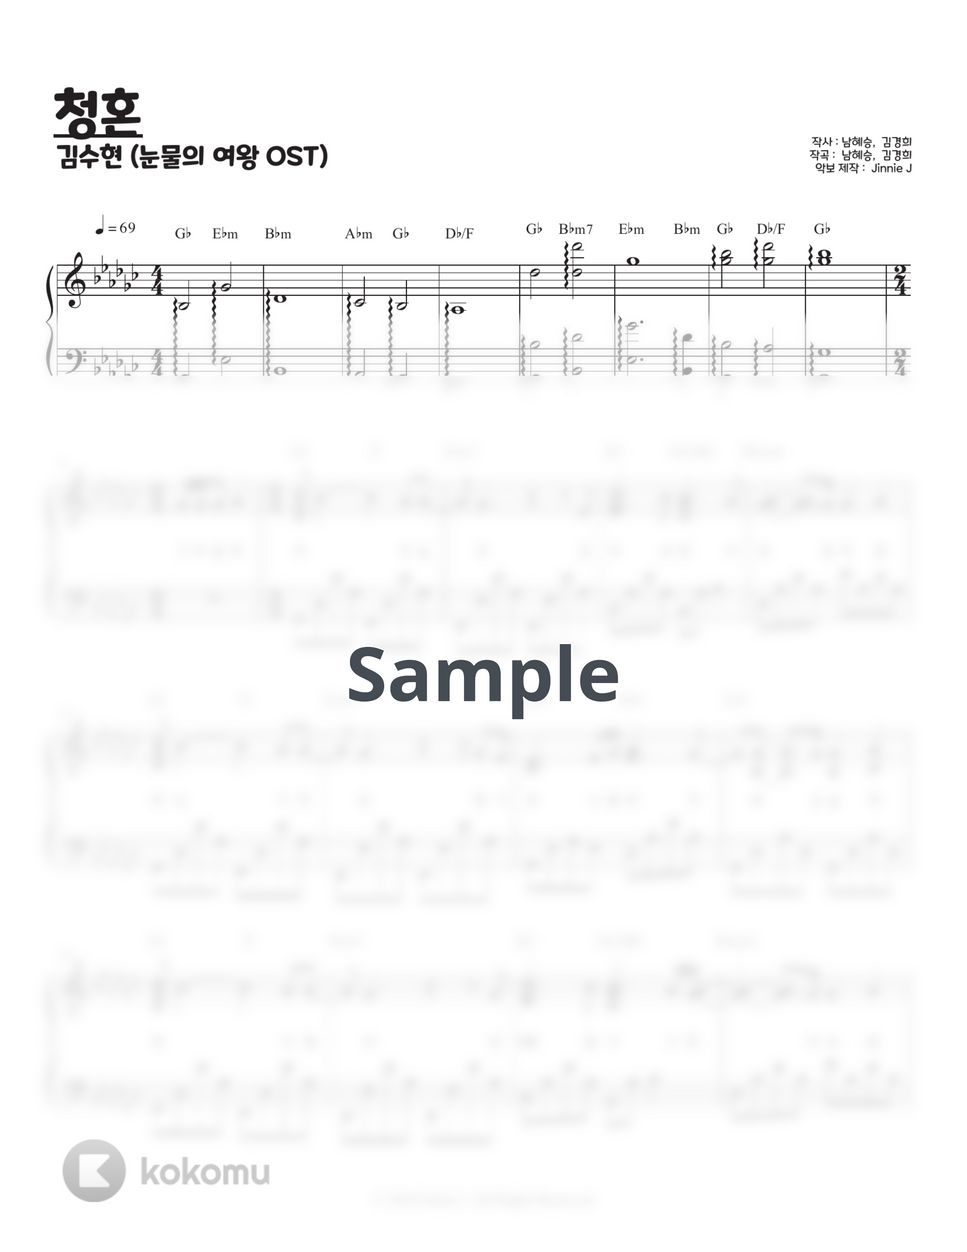 Kim Soo Hyun - Way Home(Queen of Tears OST) (Gb key, G key) by Jinnie J